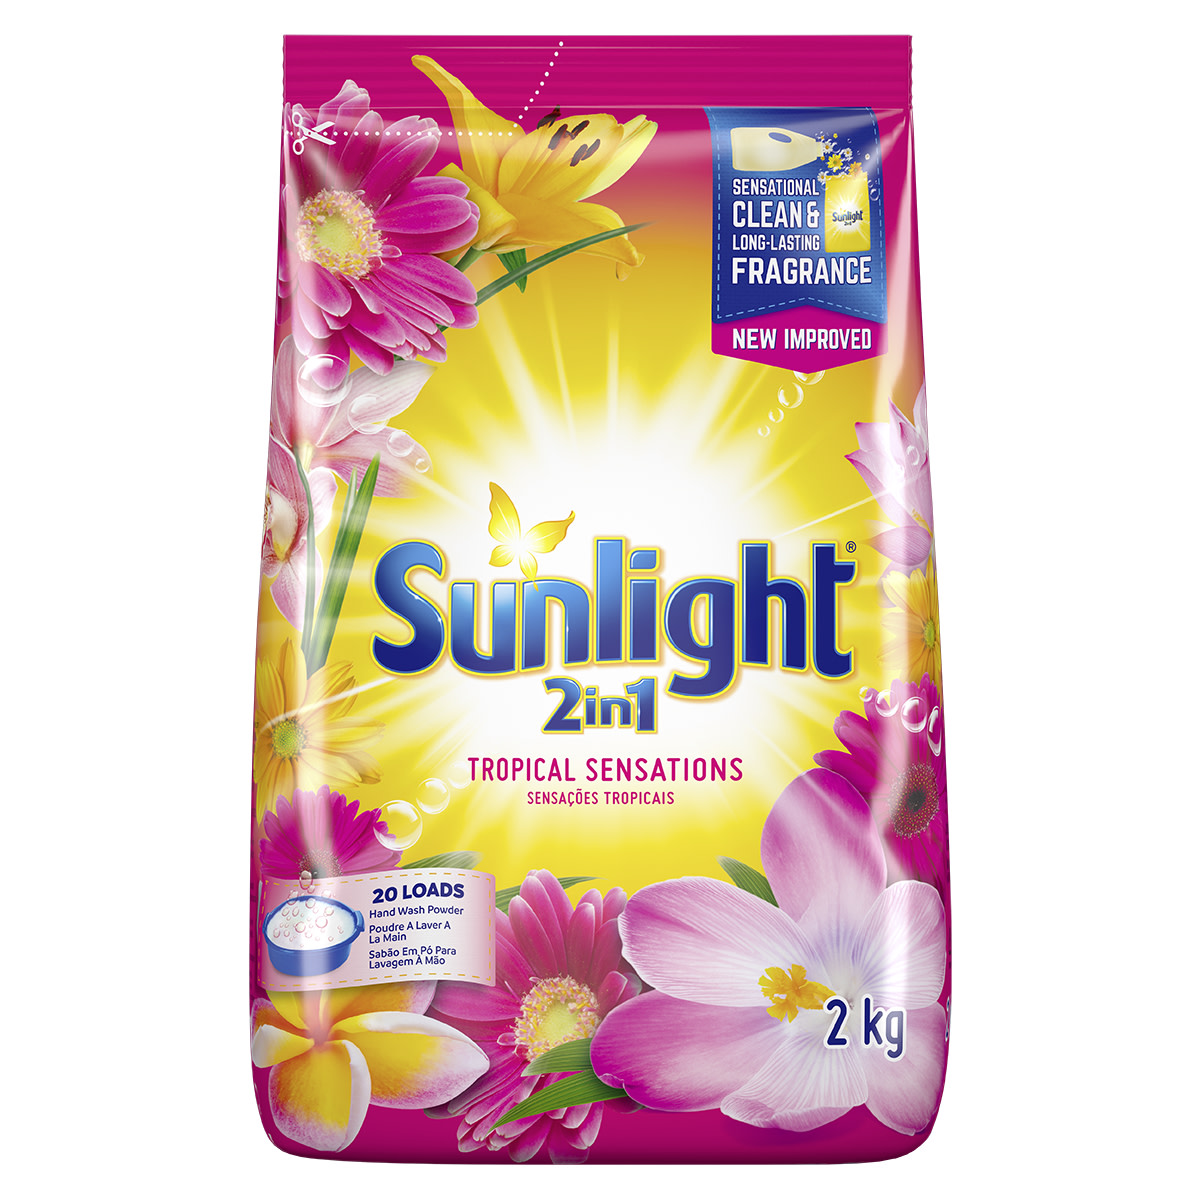 Sunlight 2in1 Tropical Sensations Handwash Washing Powder